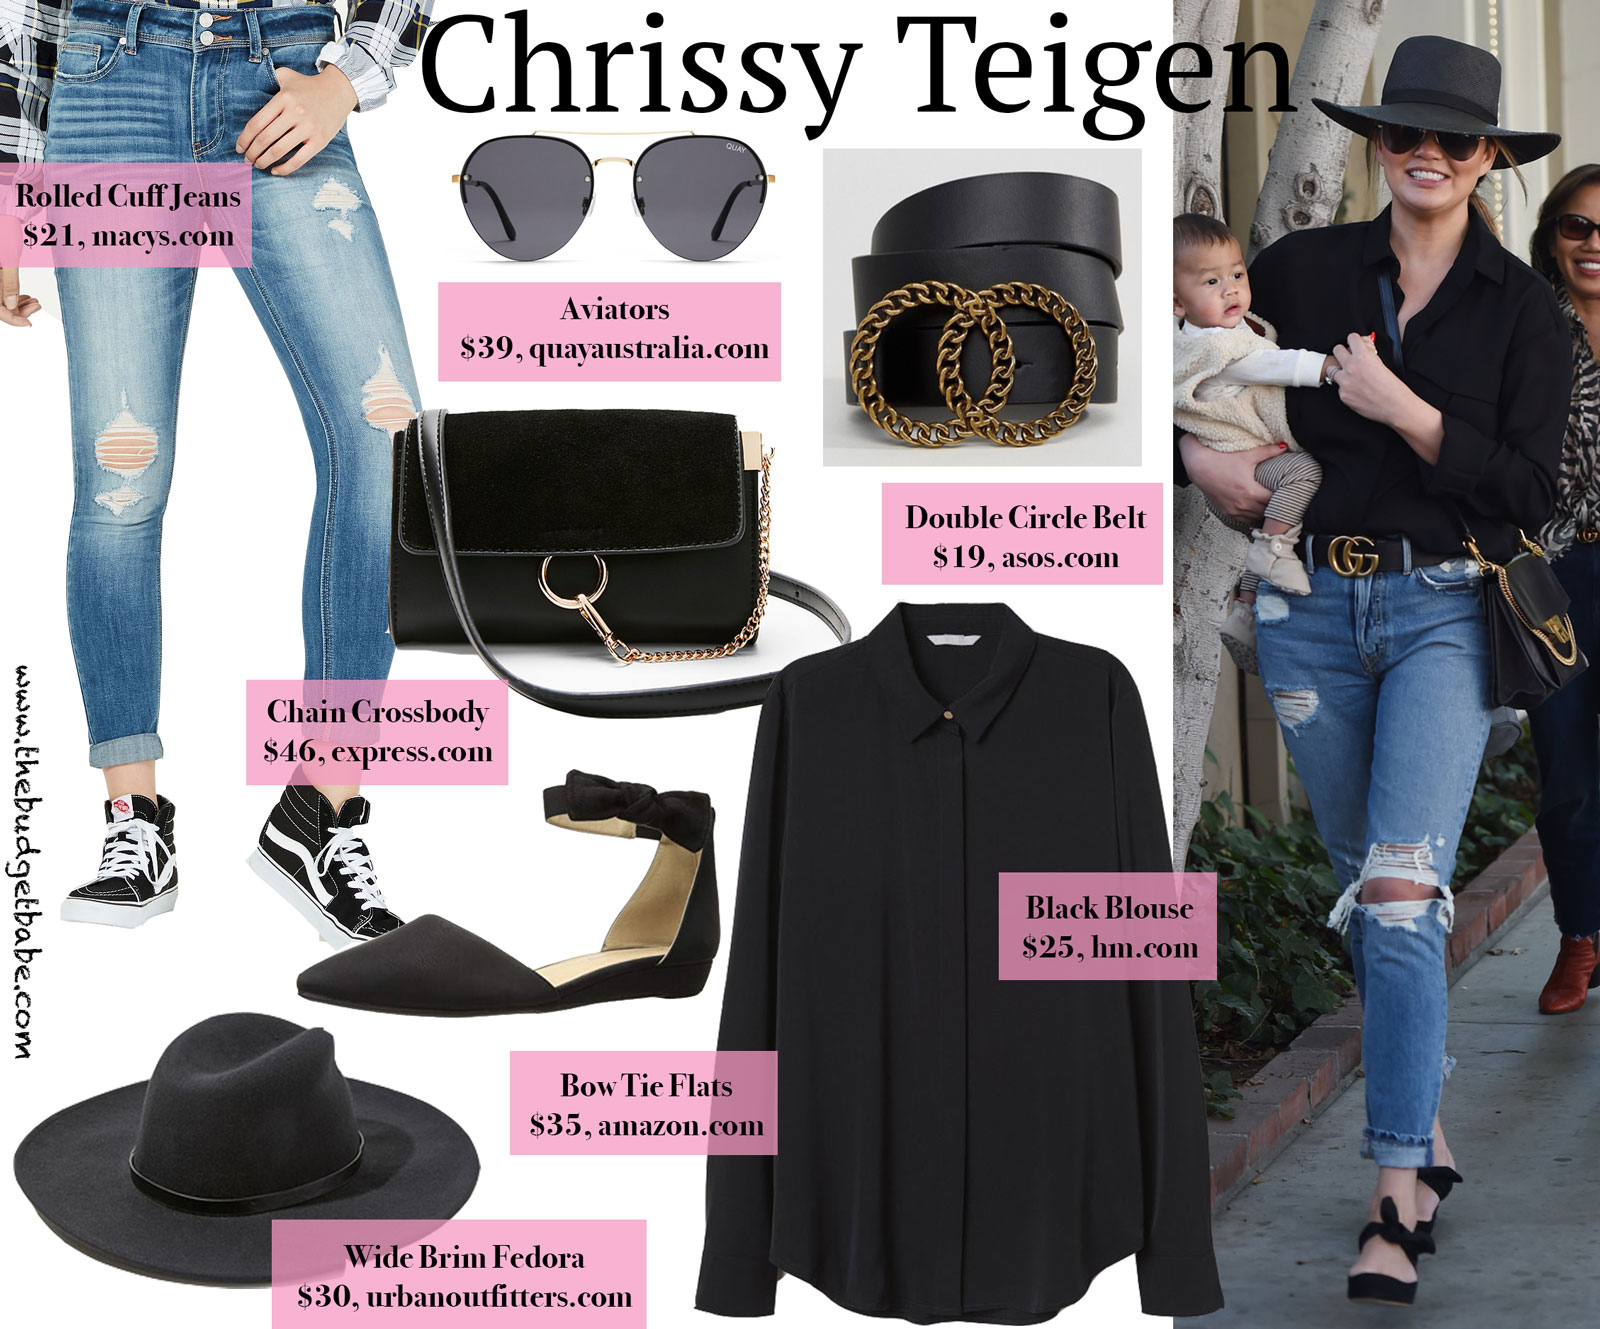 Chrissy Teigen Black Blouse Gucci Belt Look for Less